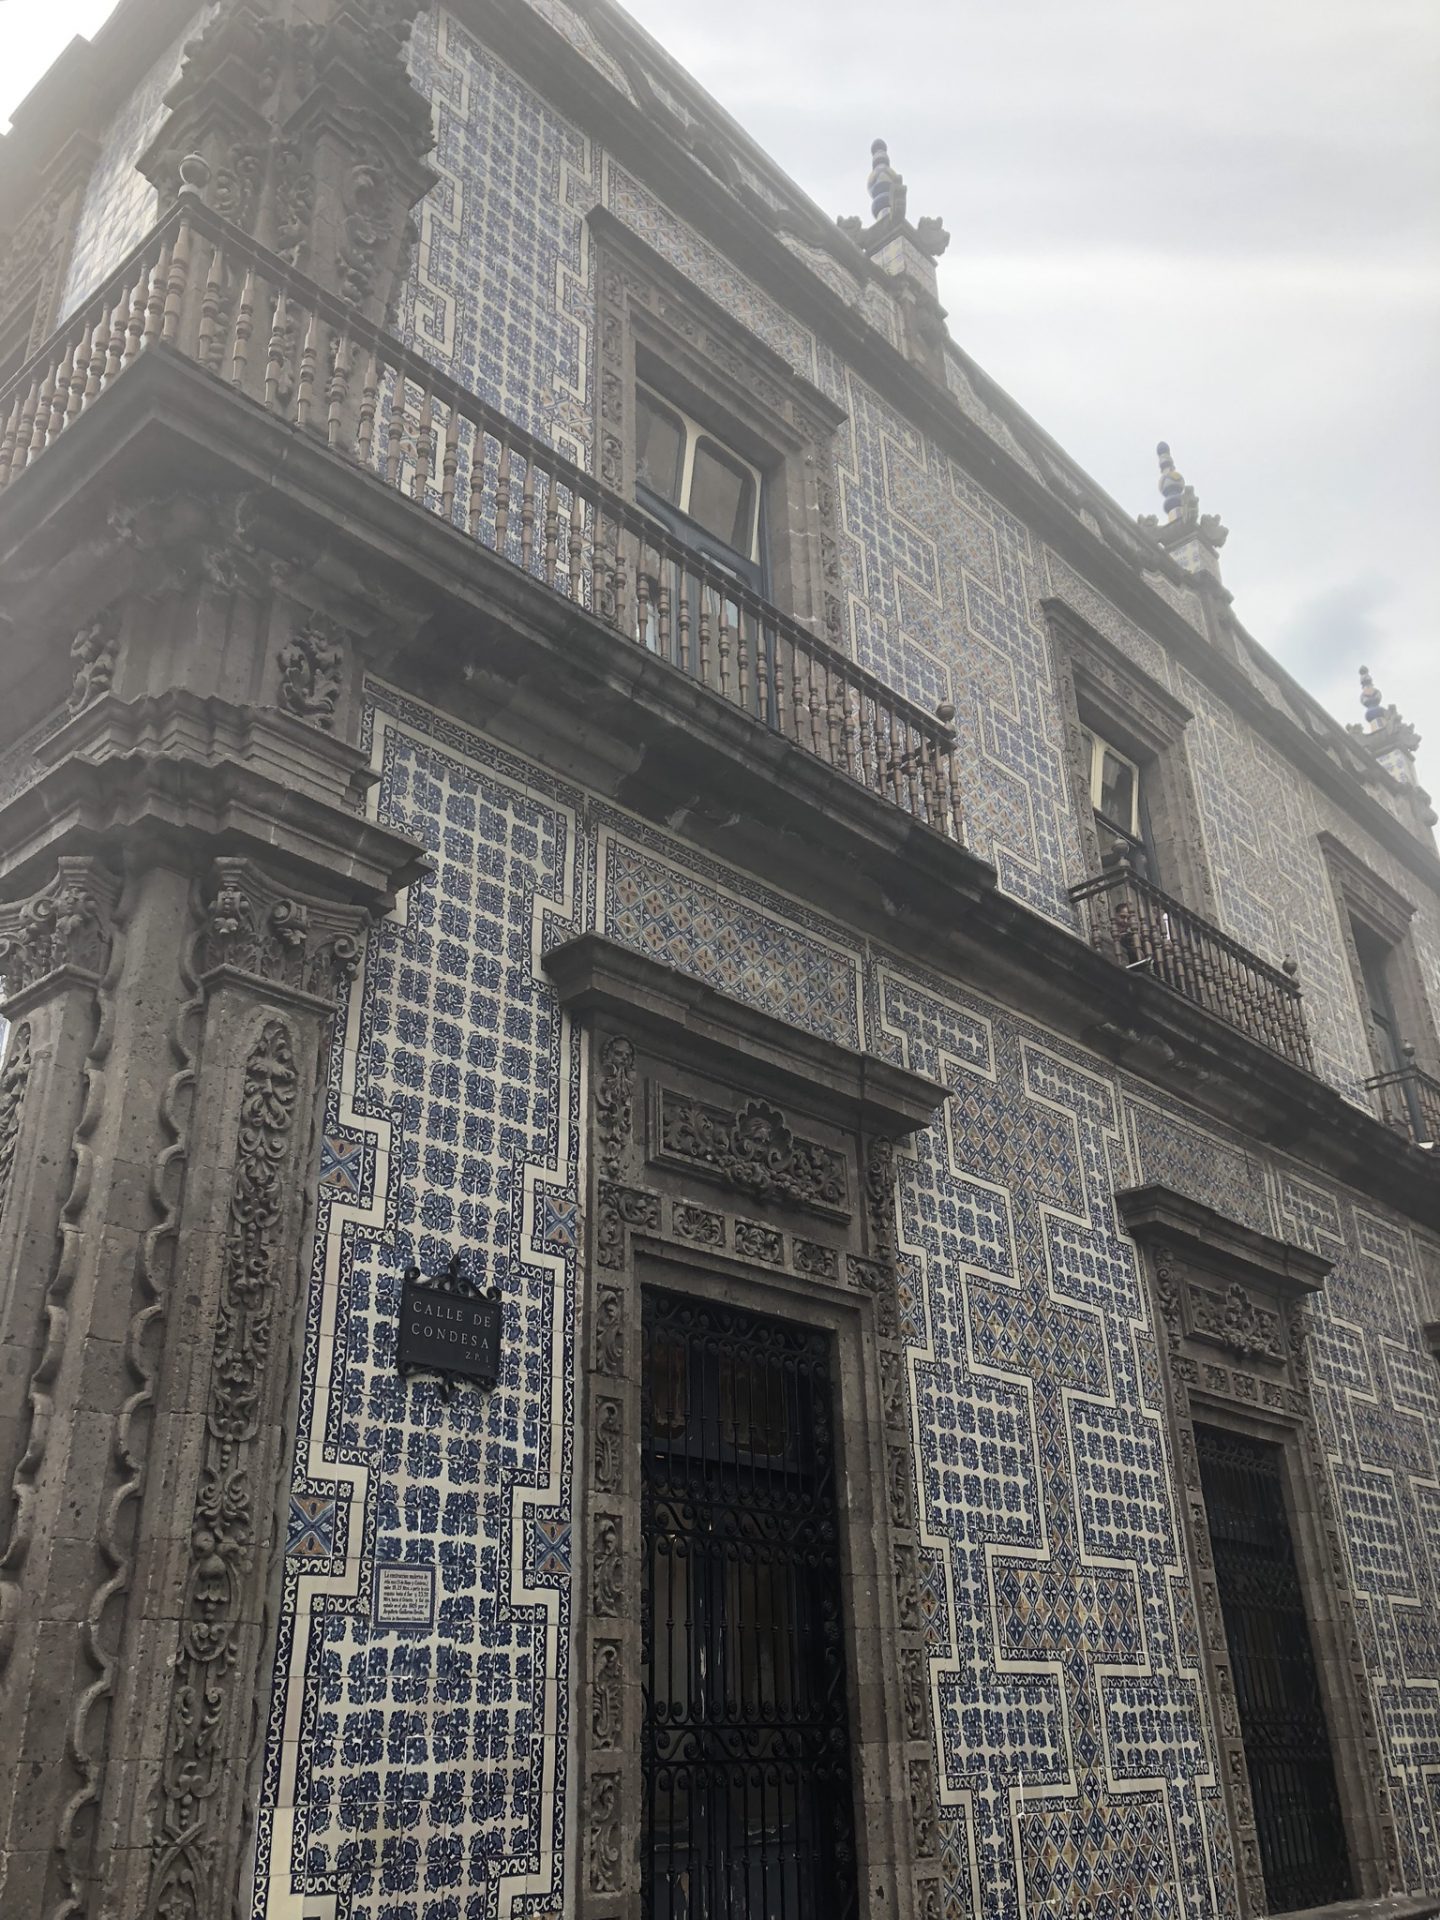 The House of Tiles, La Casa de Azulejos